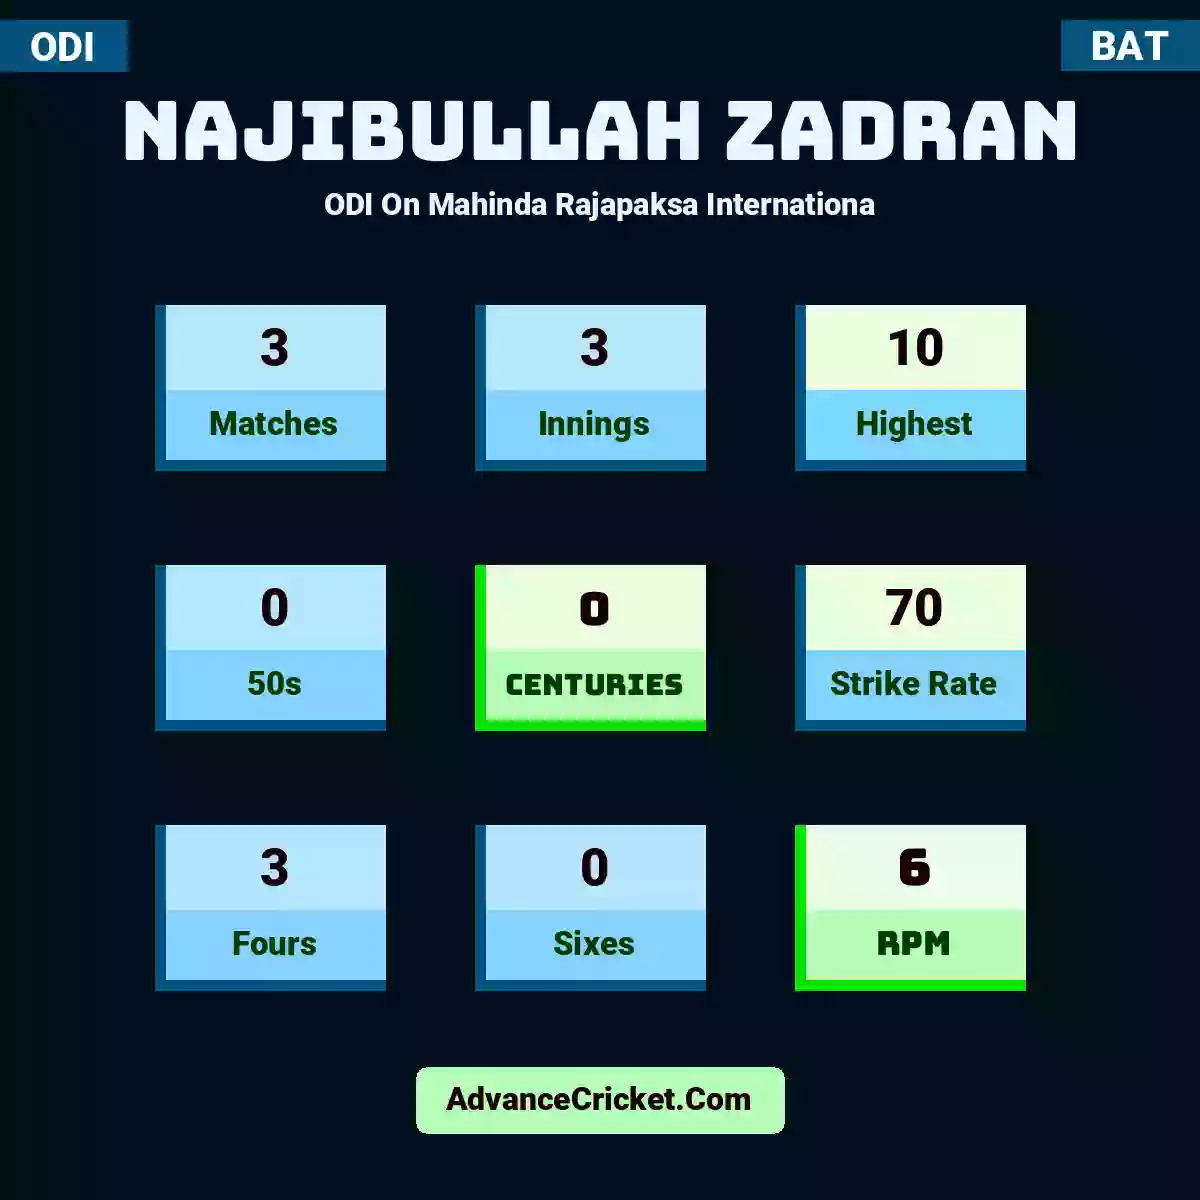 Najibullah Zadran ODI  On Mahinda Rajapaksa Internationa, Najibullah Zadran played 3 matches, scored 10 runs as highest, 0 half-centuries, and 0 centuries, with a strike rate of 70. N.Zadran hit 3 fours and 0 sixes, with an RPM of 6.